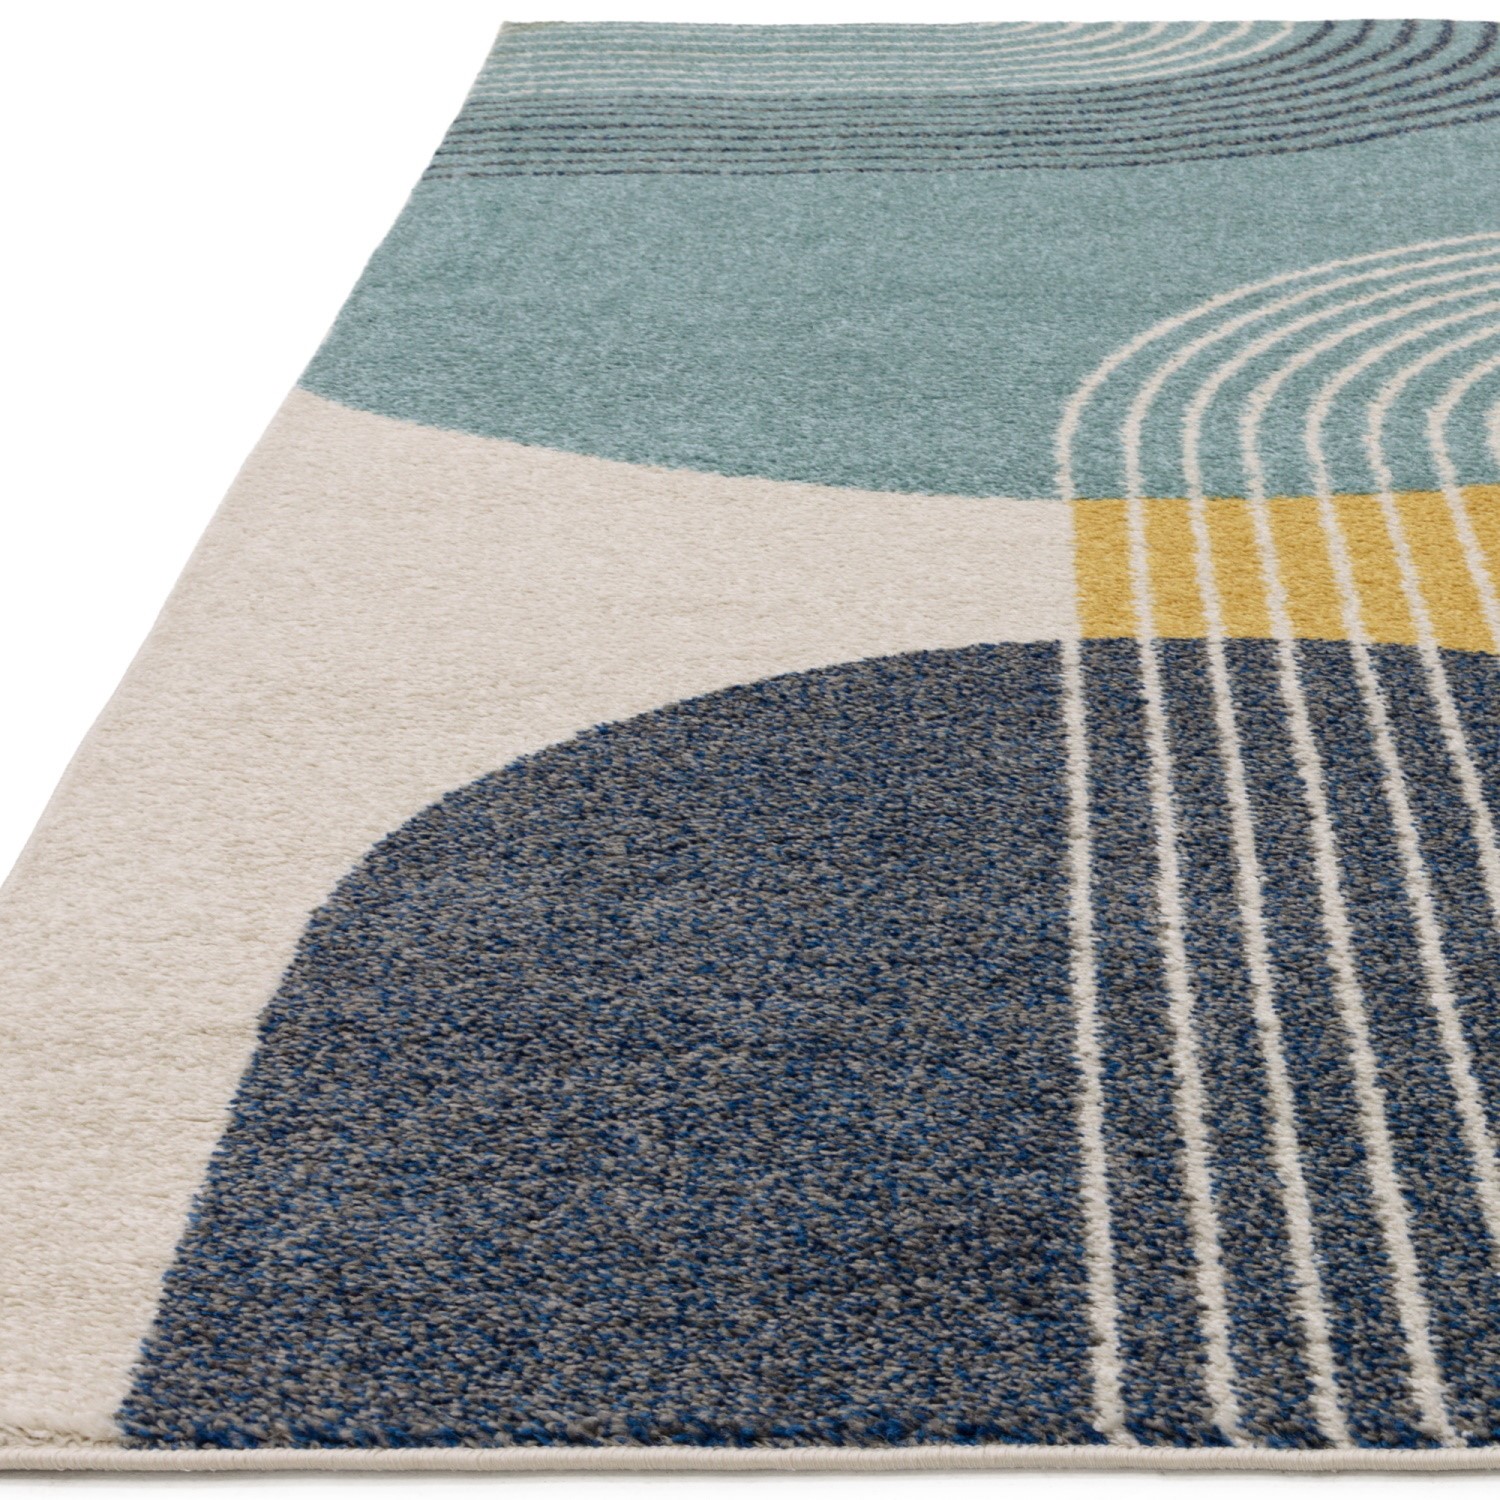 Read more about Multi coloured retro rug 120 x 170 cm muse